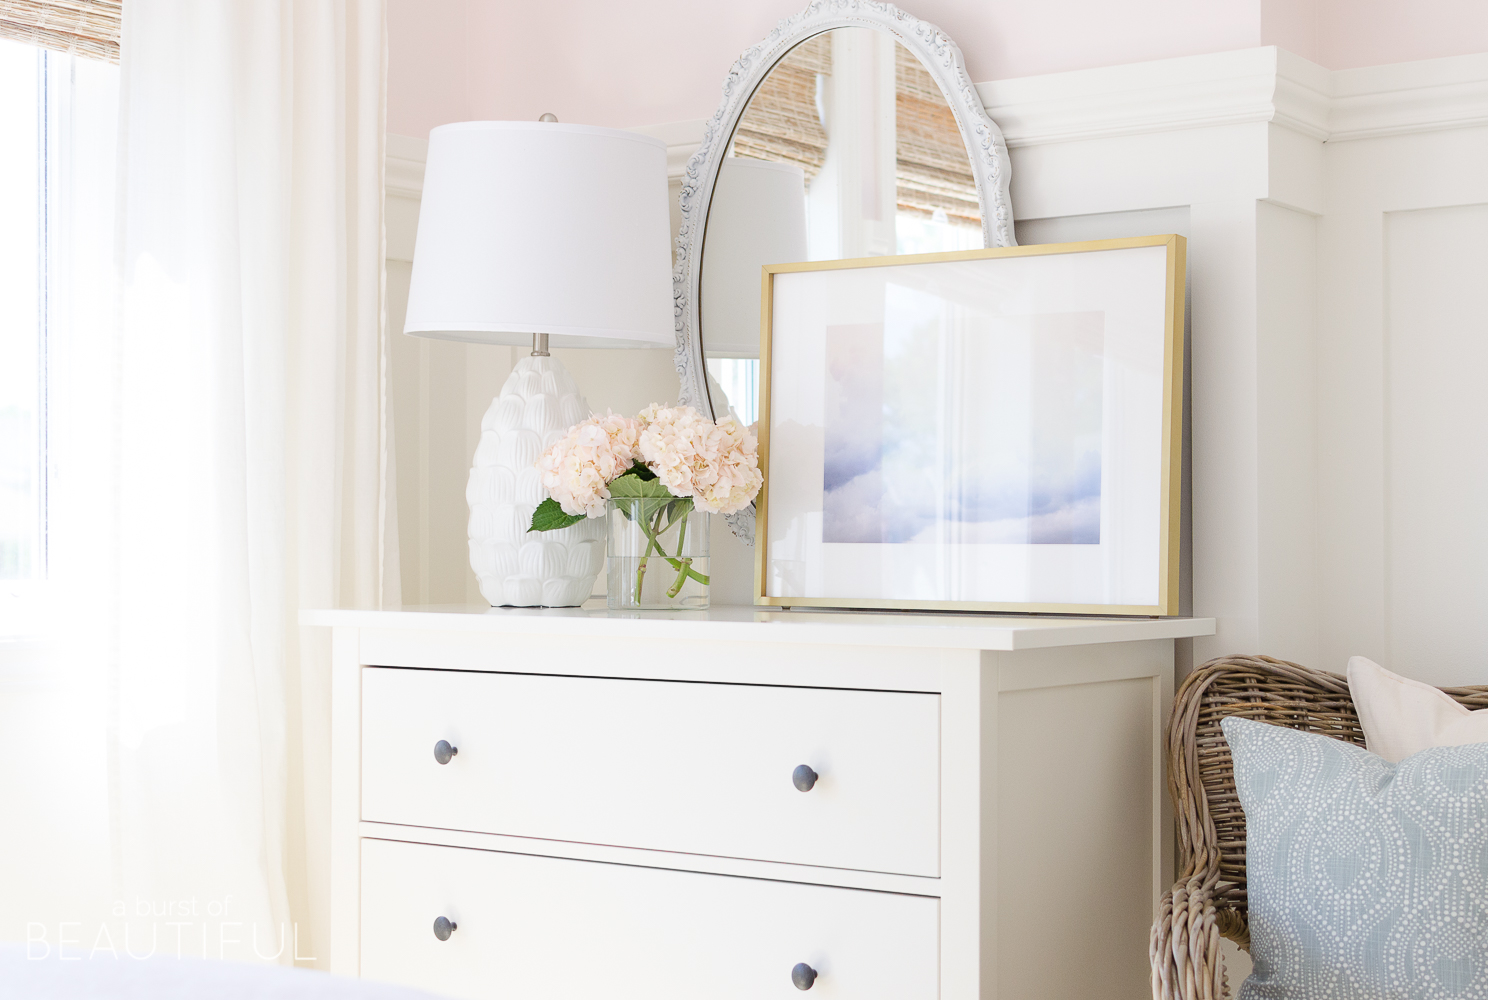 Toddler Girl Pink Bedroom Design & Decor with dresser, mirror, artwork and flowers